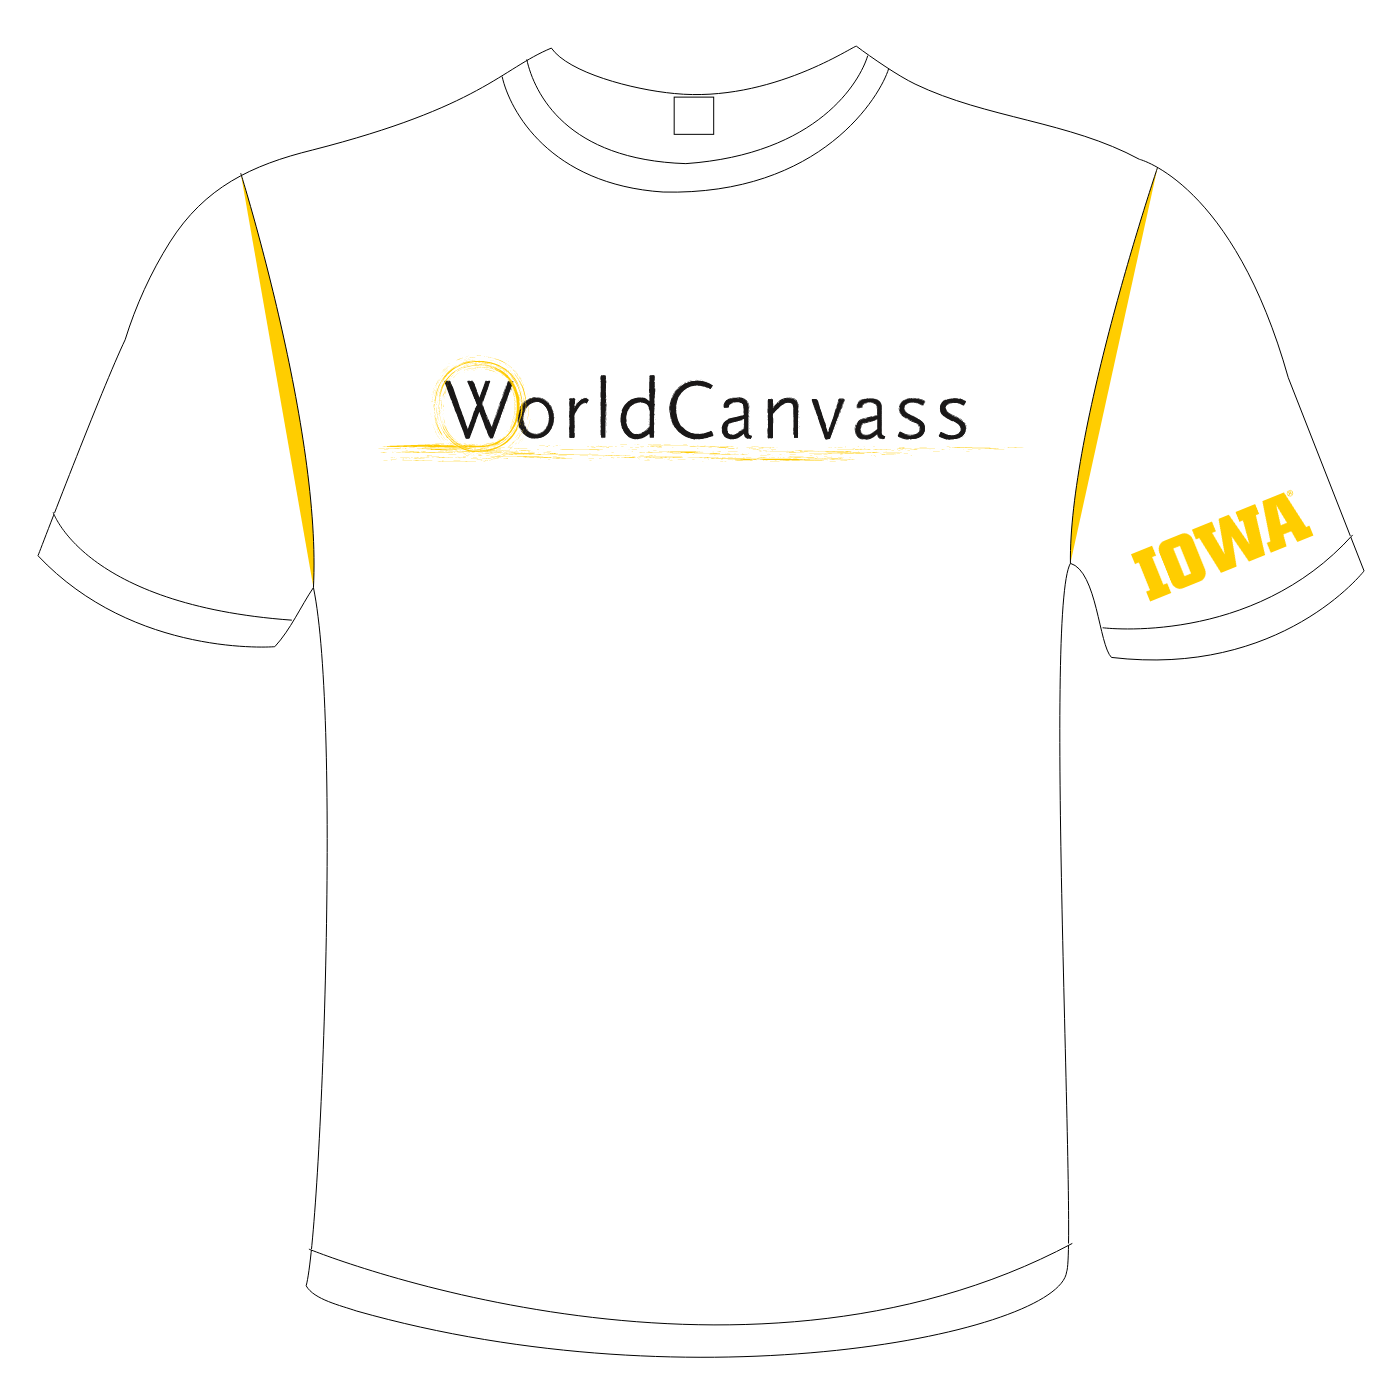 WorldCanvass logo shown on front of tee with block IOWA logo on sleeve